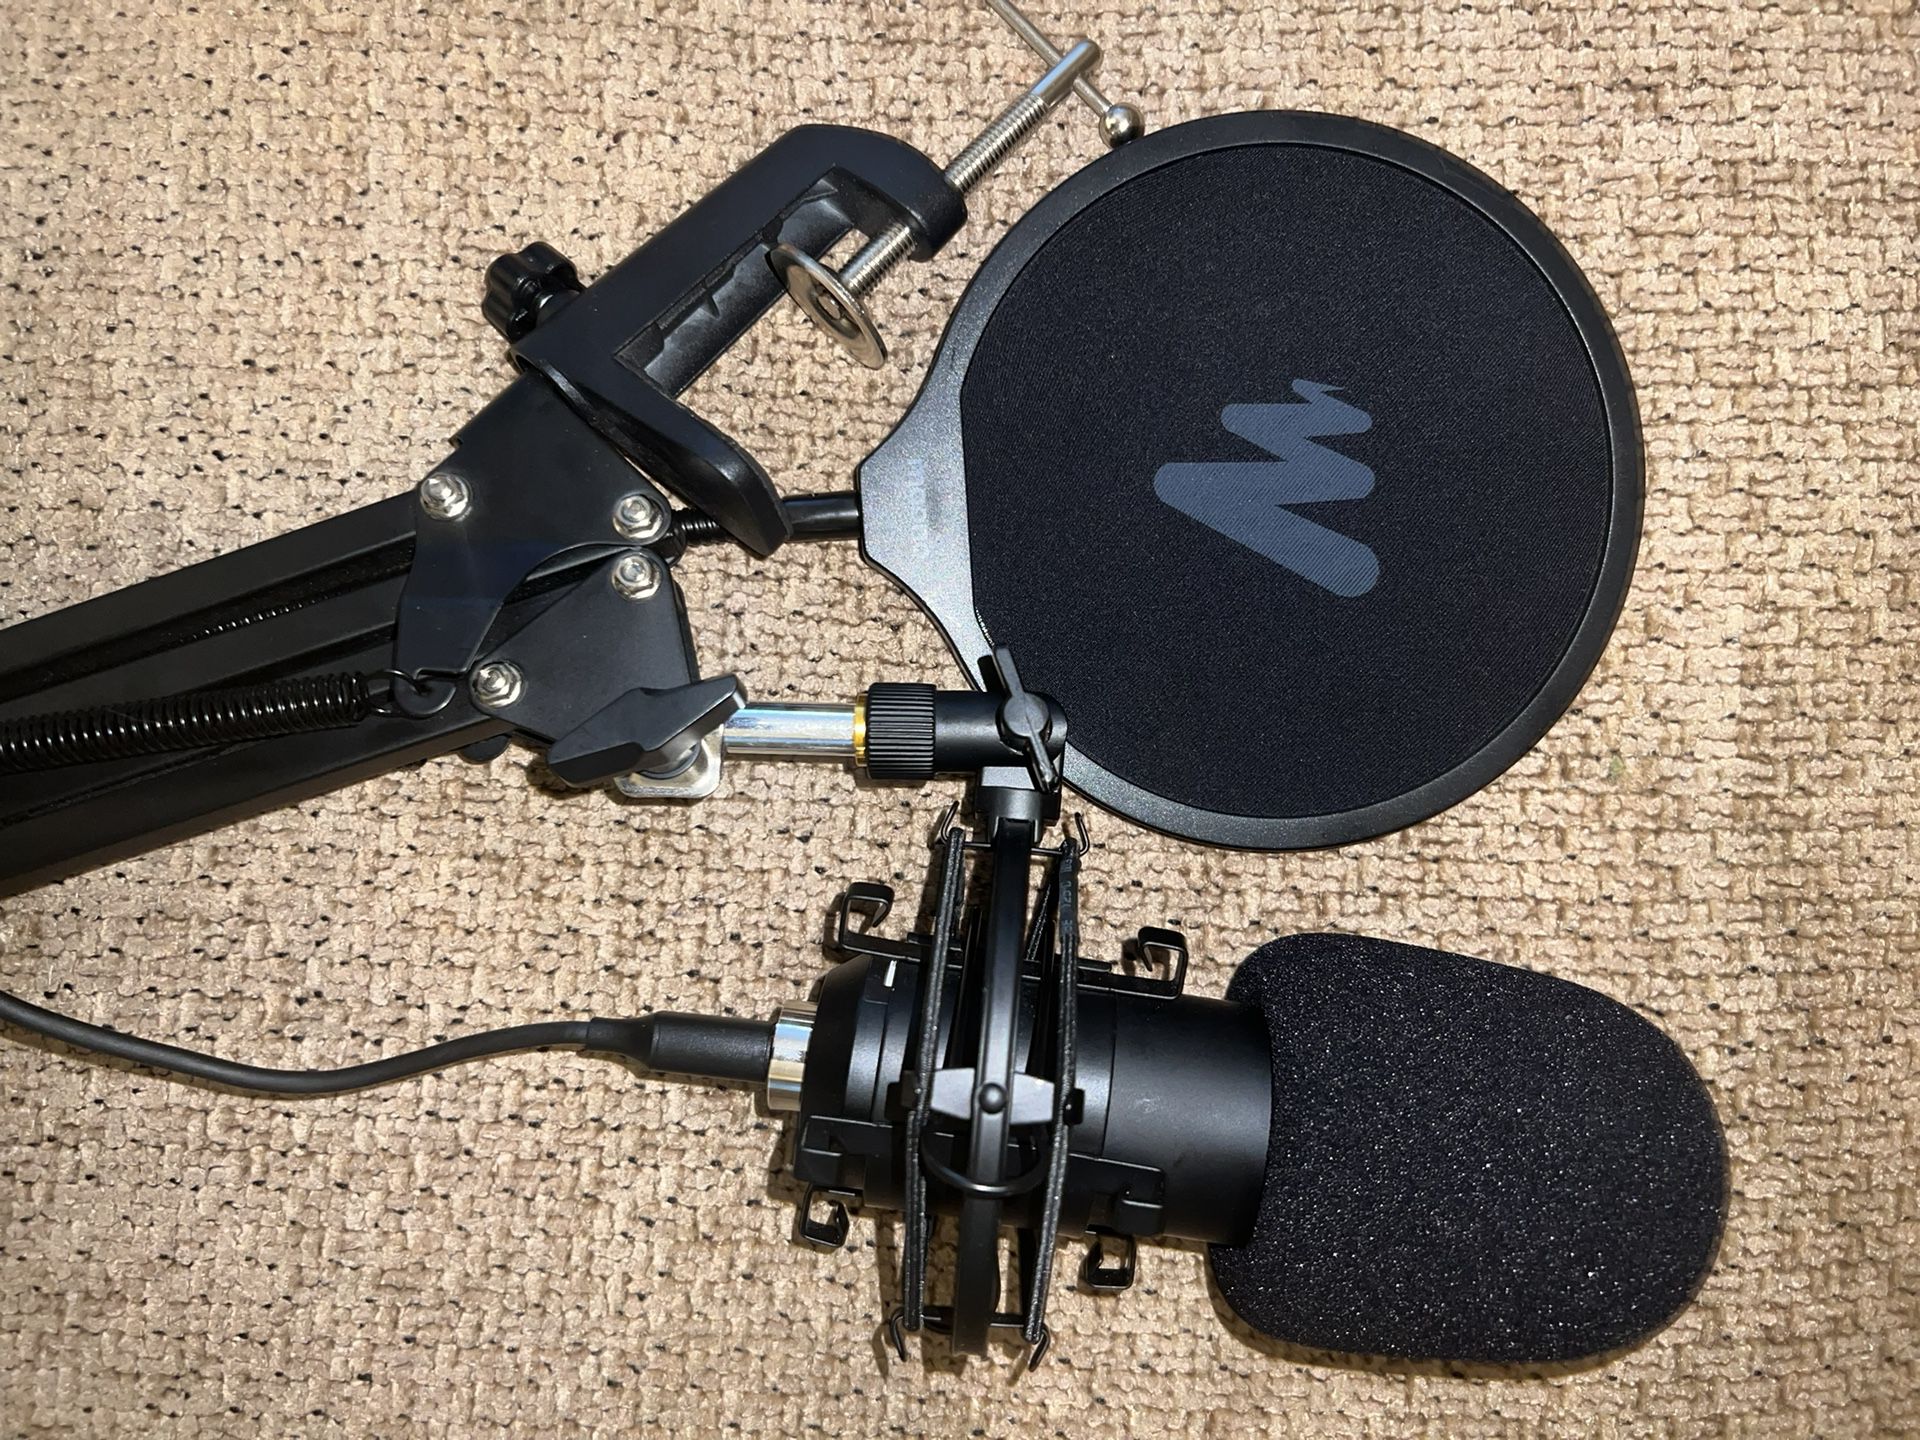 Maono Studio Professional Microphone 